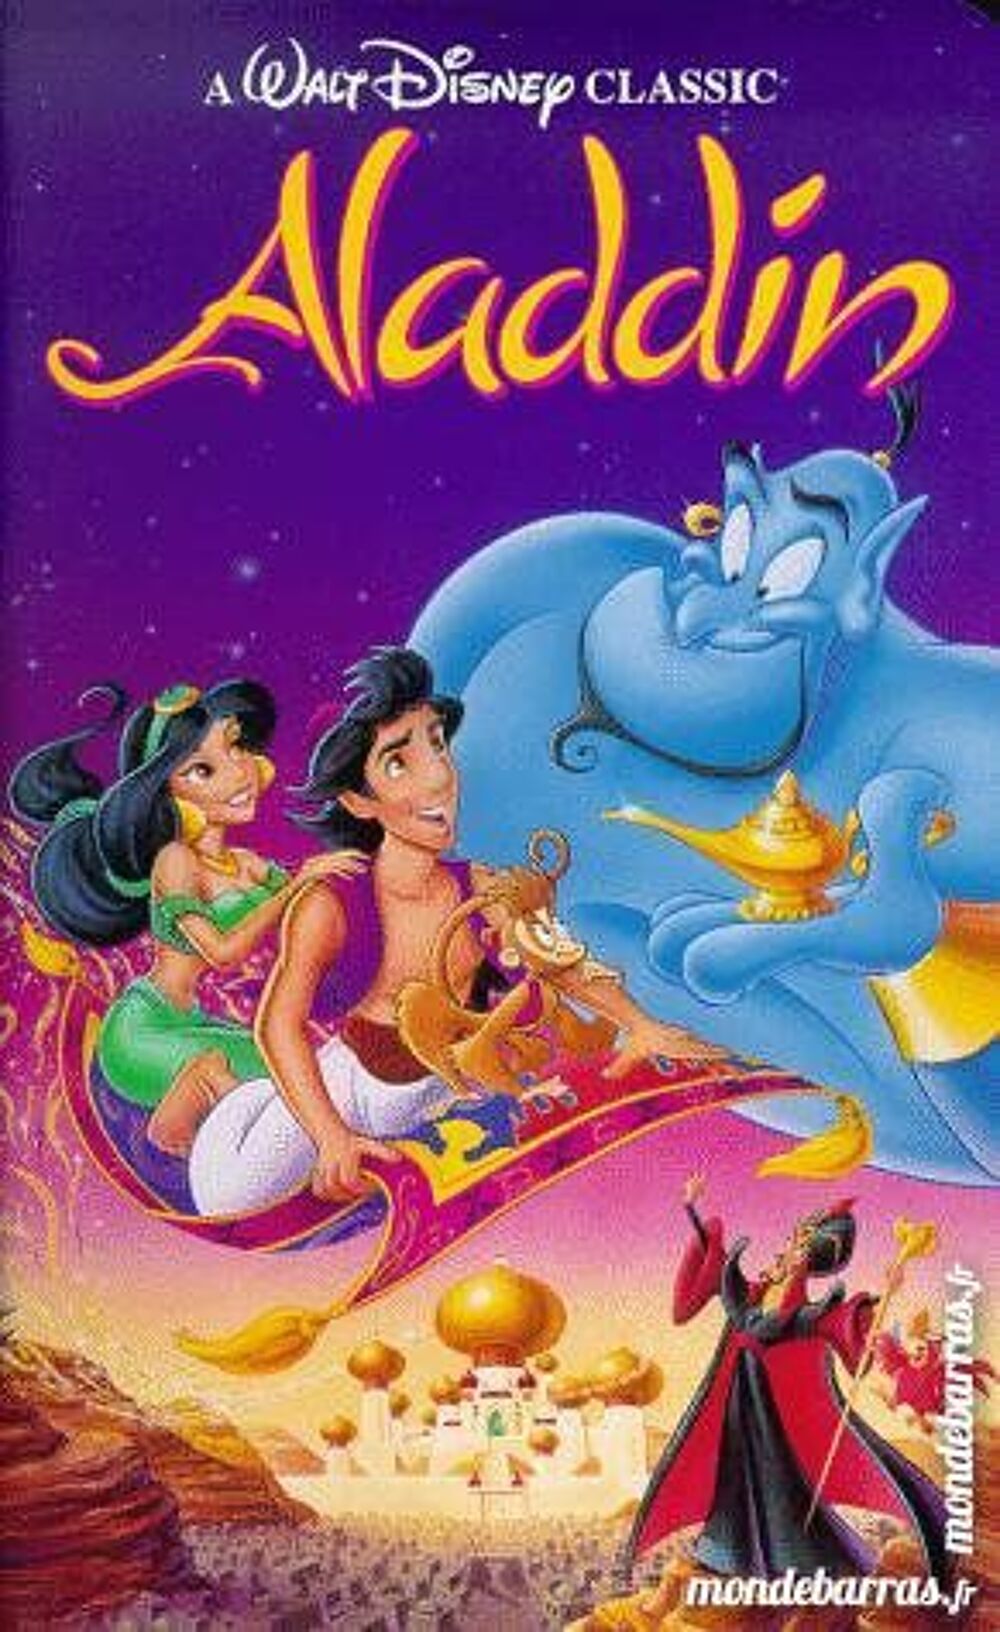 K7 Vhs: Aladdin (175) DVD et blu-ray